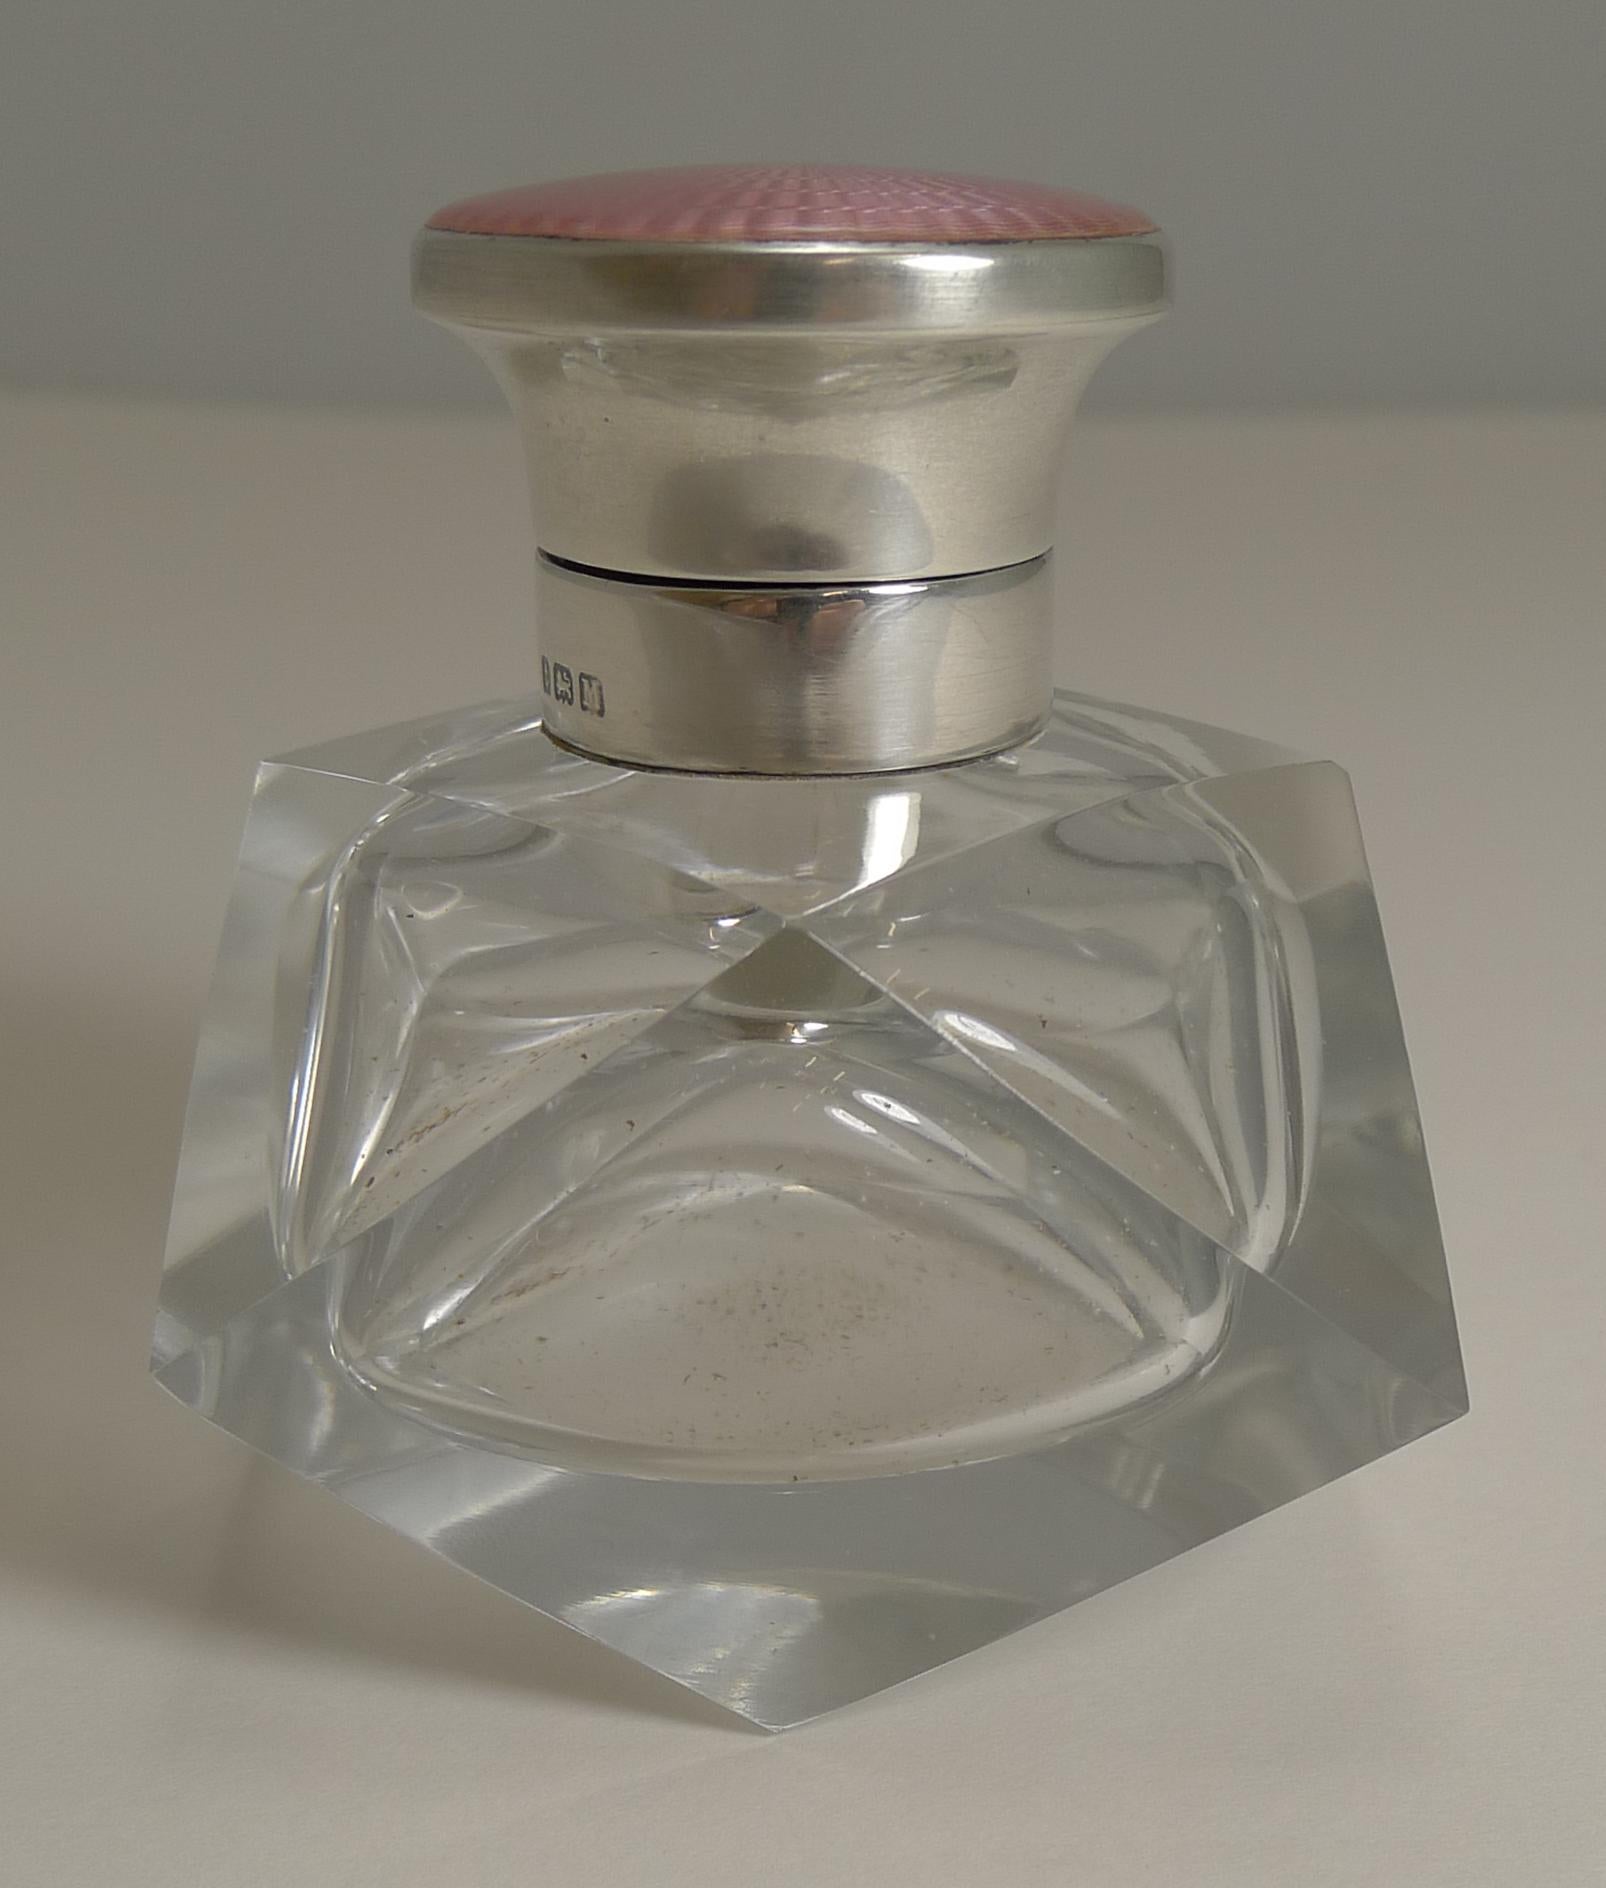 art deco silver perfume bottle